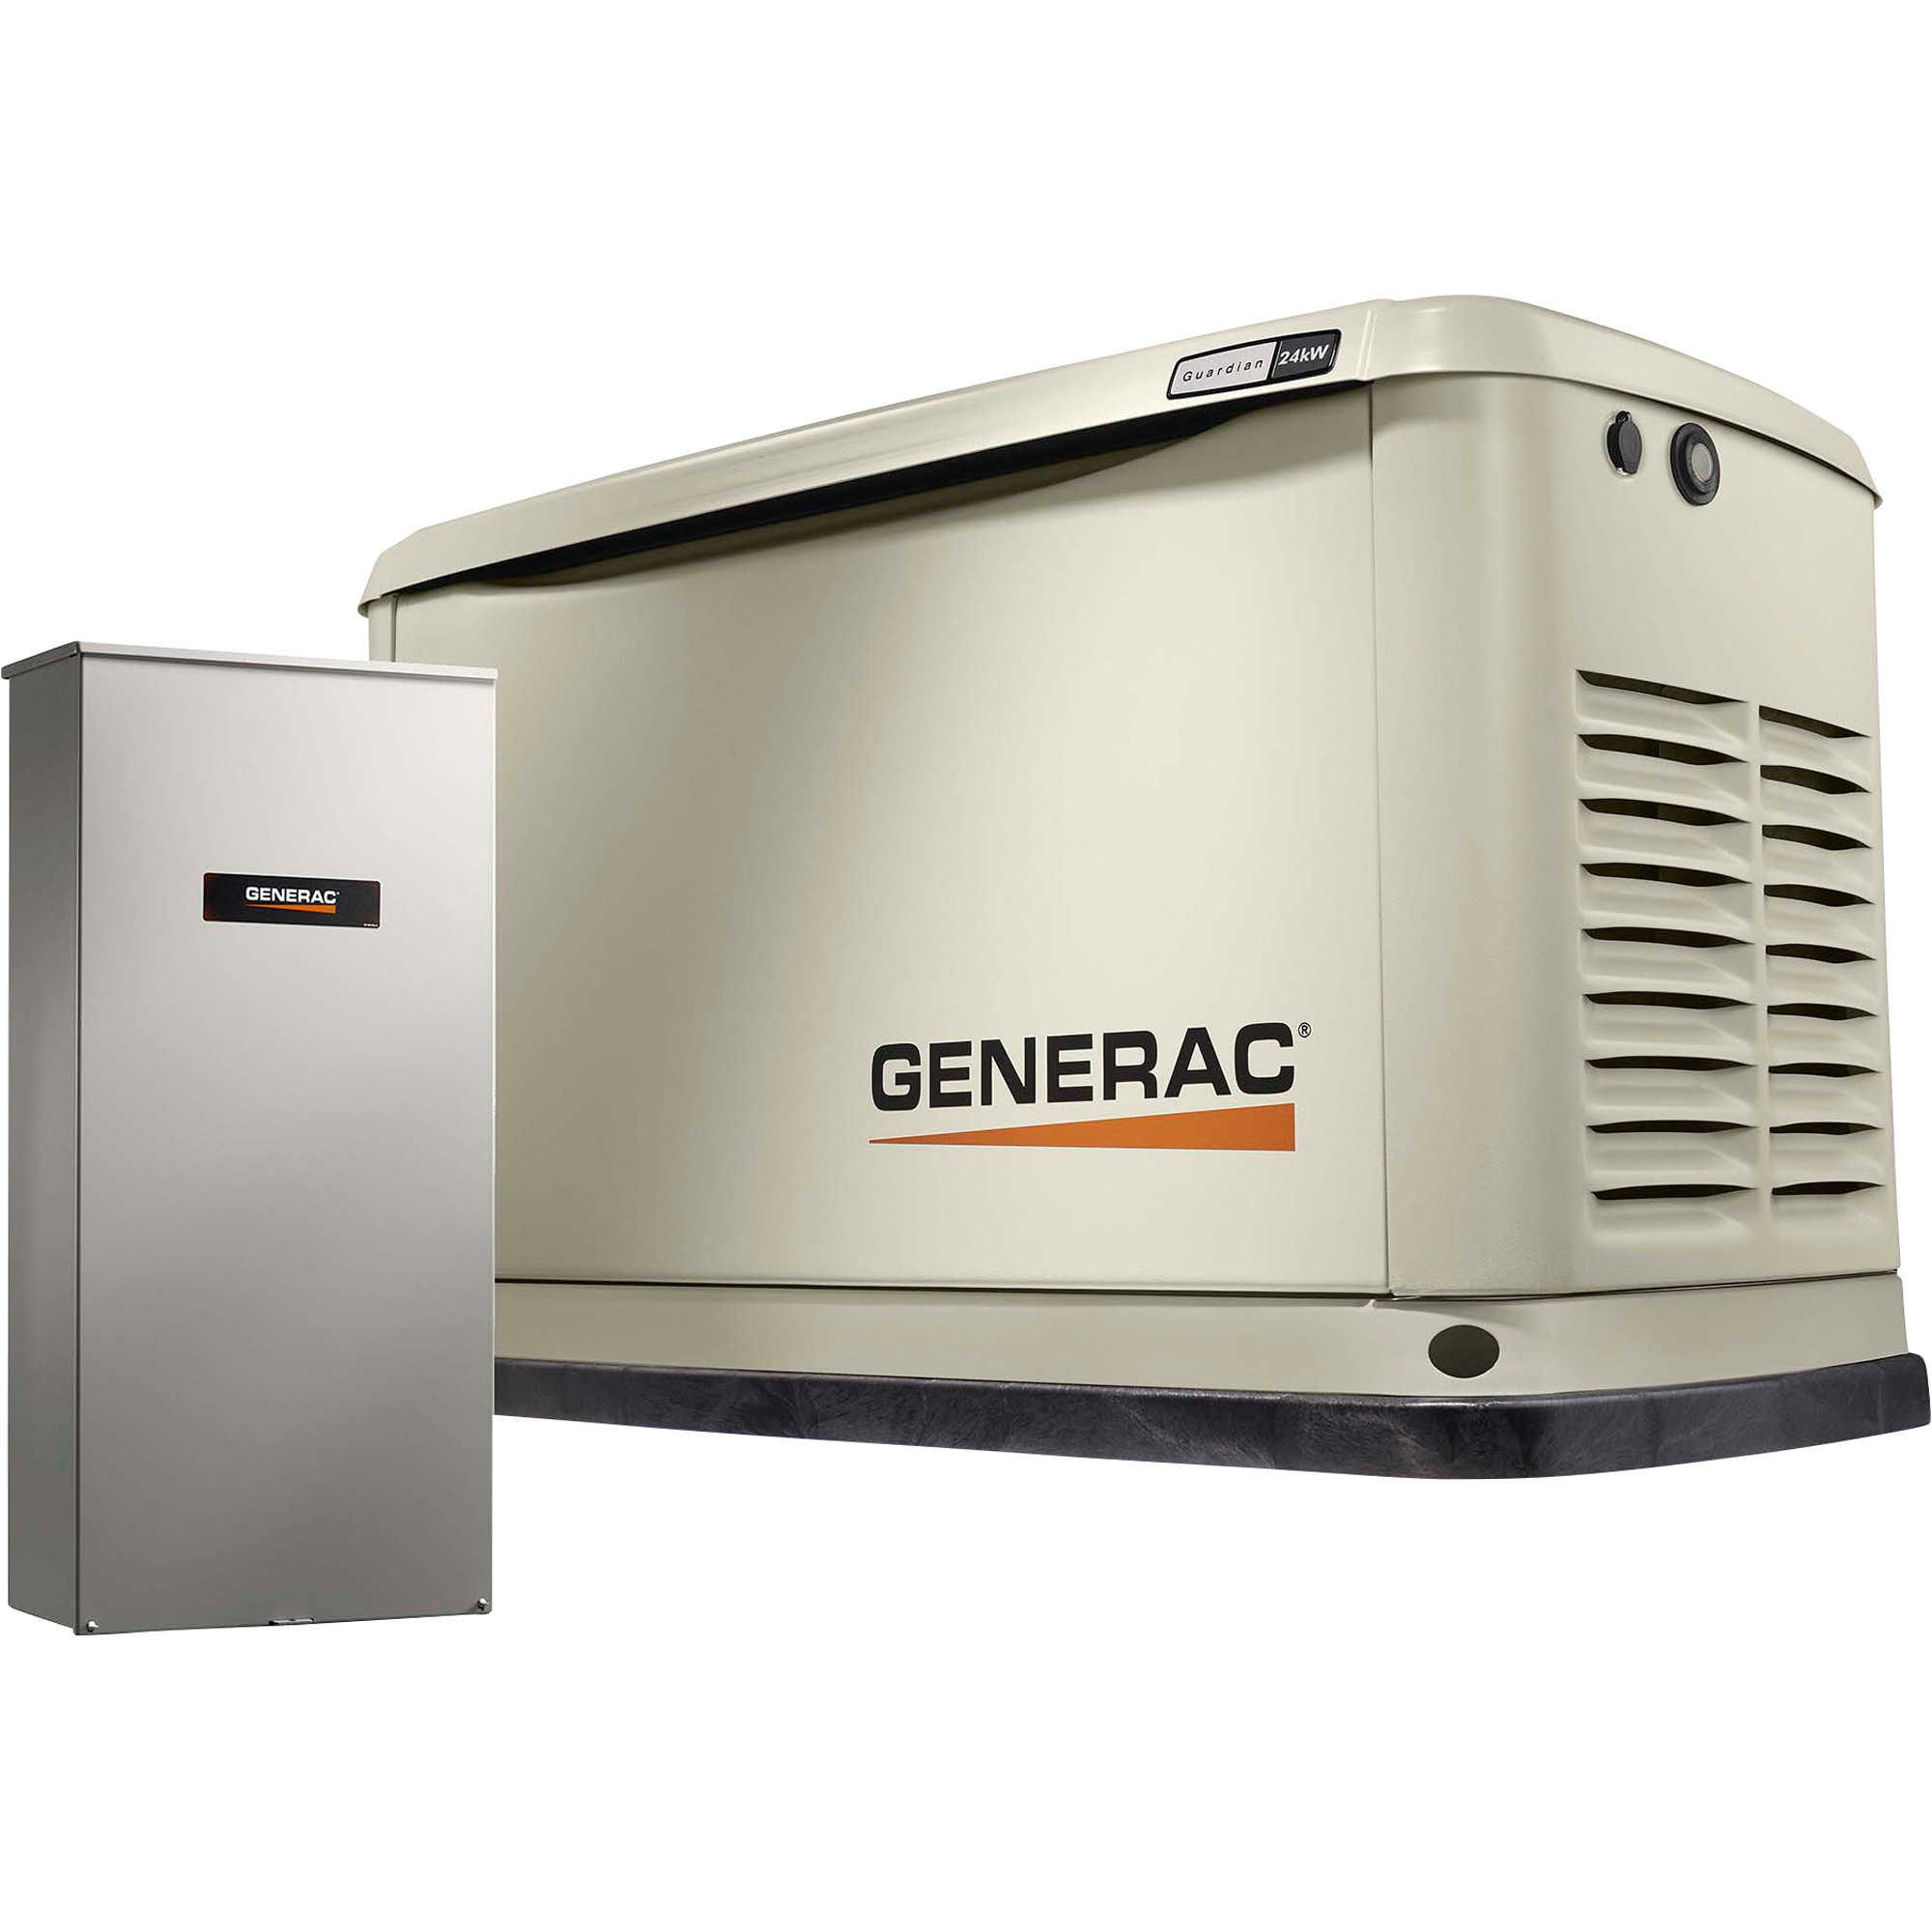 Generac Guardian Series Home Standby Generator, 24kW (LP)/21kW (NG), 200 Amp Transfer Switch, Aluminum Enclosure, Model 7210